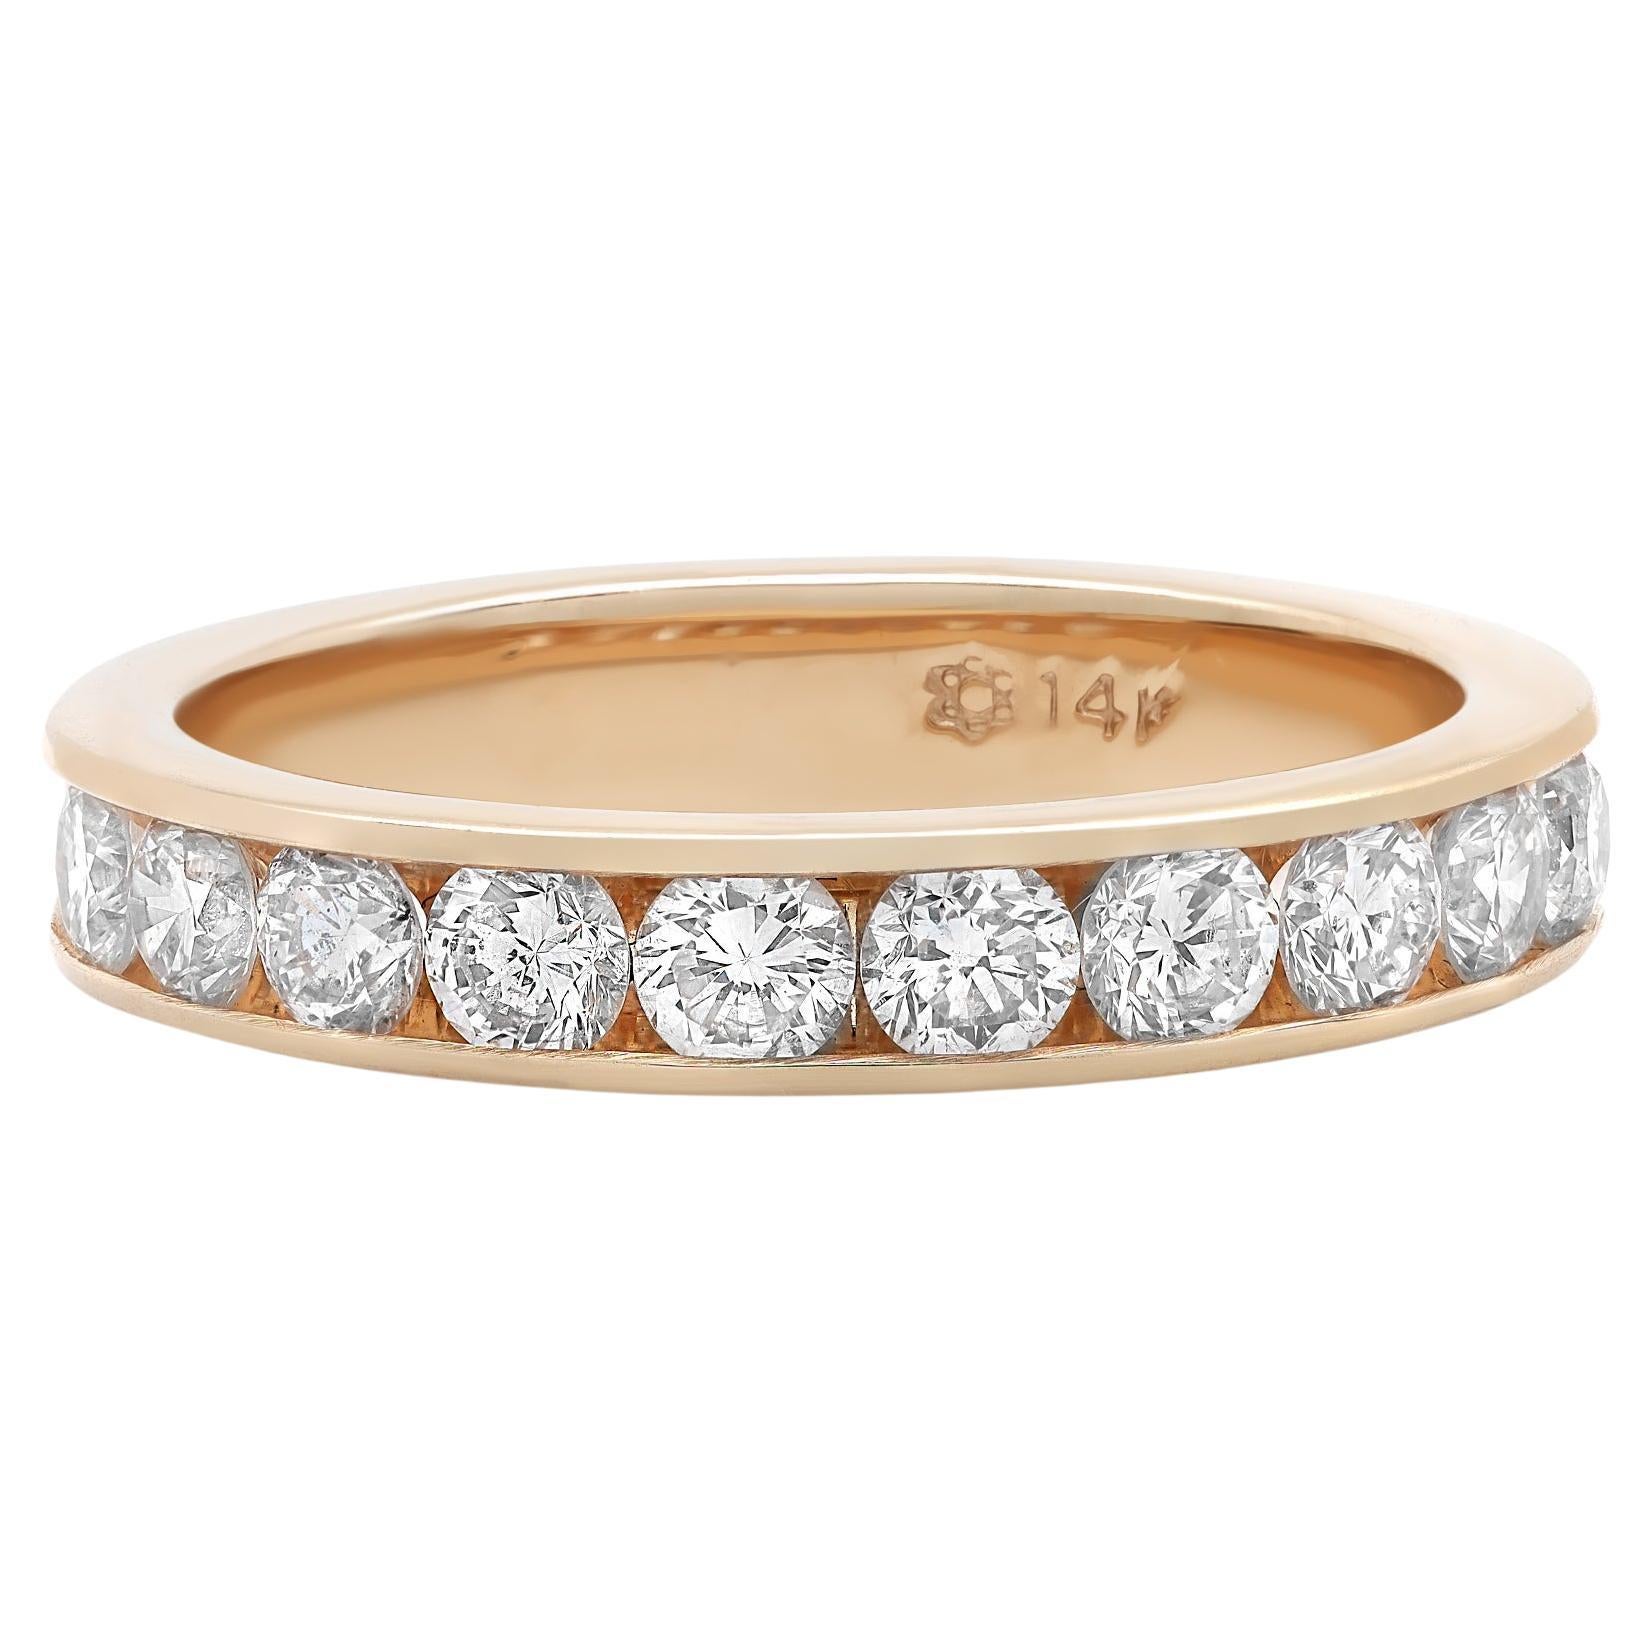 Rachel Koen 1.00Cttw Round Cut Diamond Wedding Band Ring 14K Yellow Gold For Sale